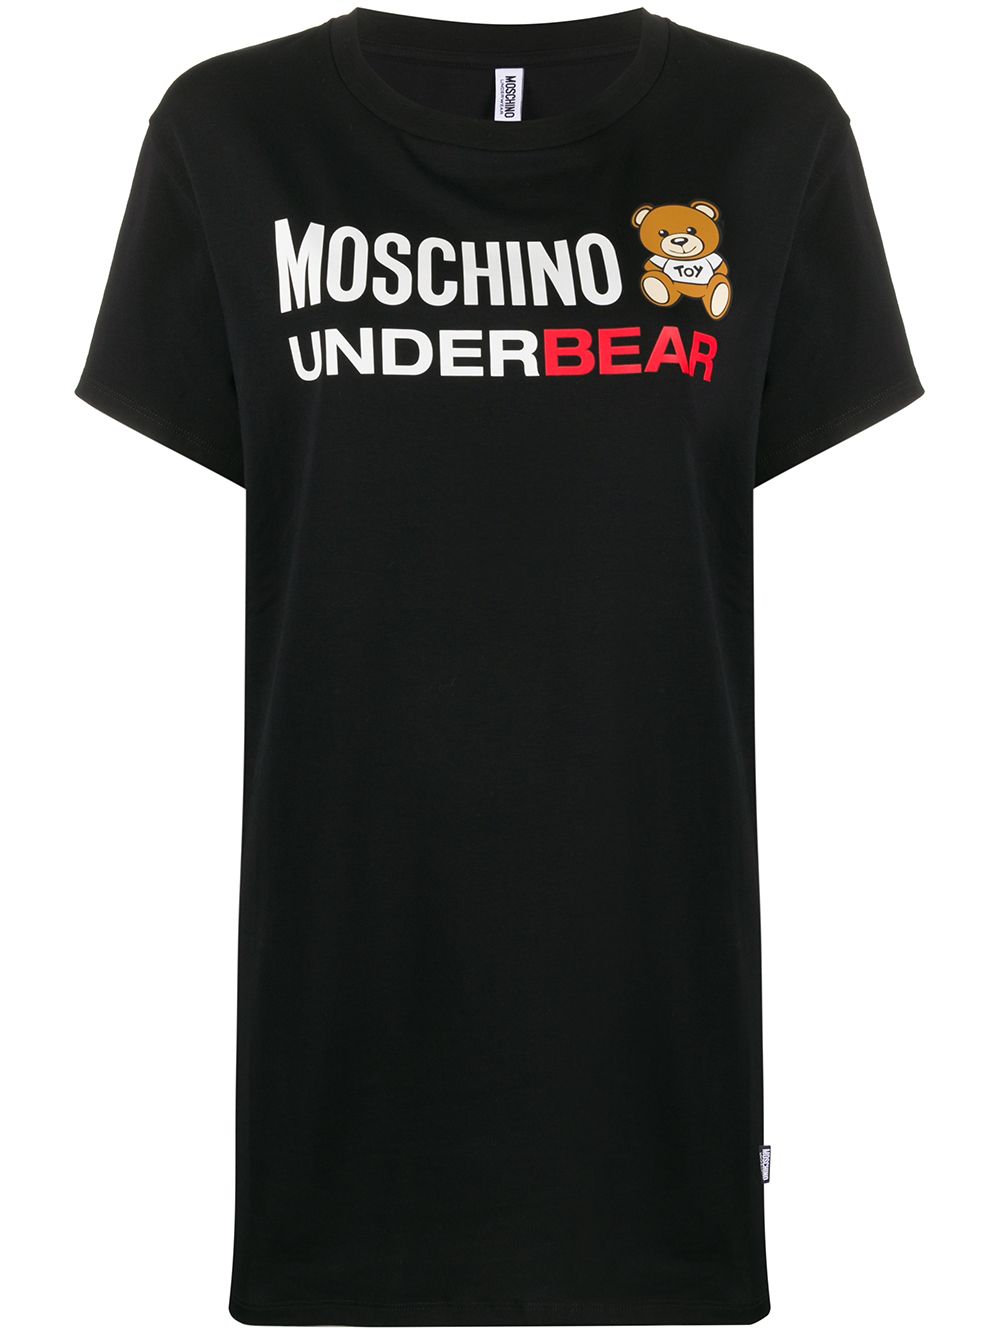 Moschino Moschino UnderBear Printed T 